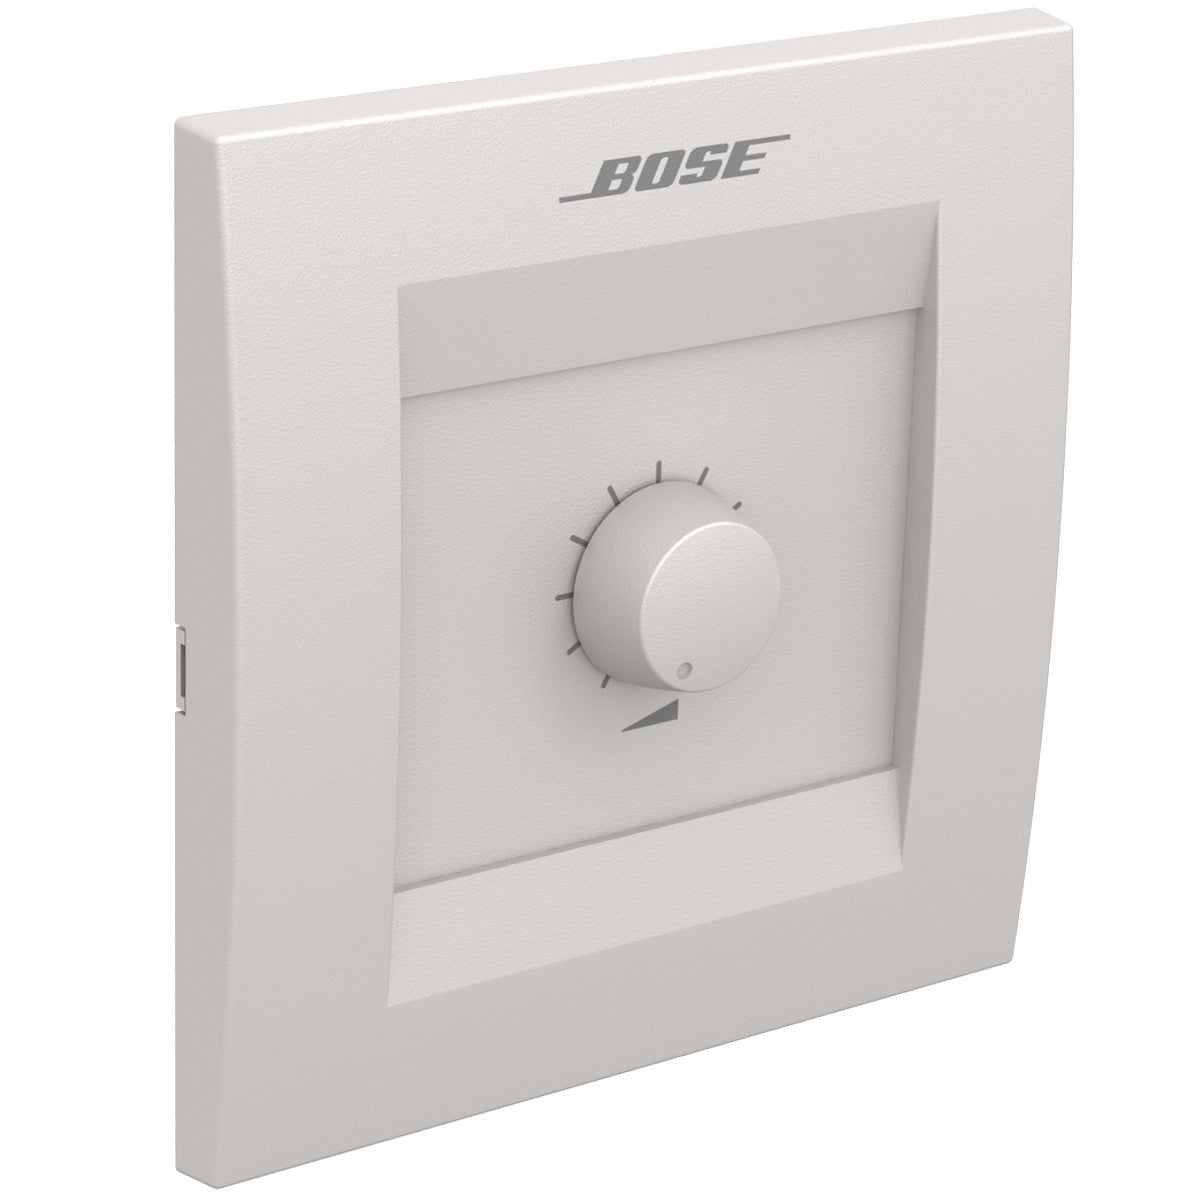 Bose Volume Control User Interface | FreeSpace DXA 2120 Volume Controller 41966